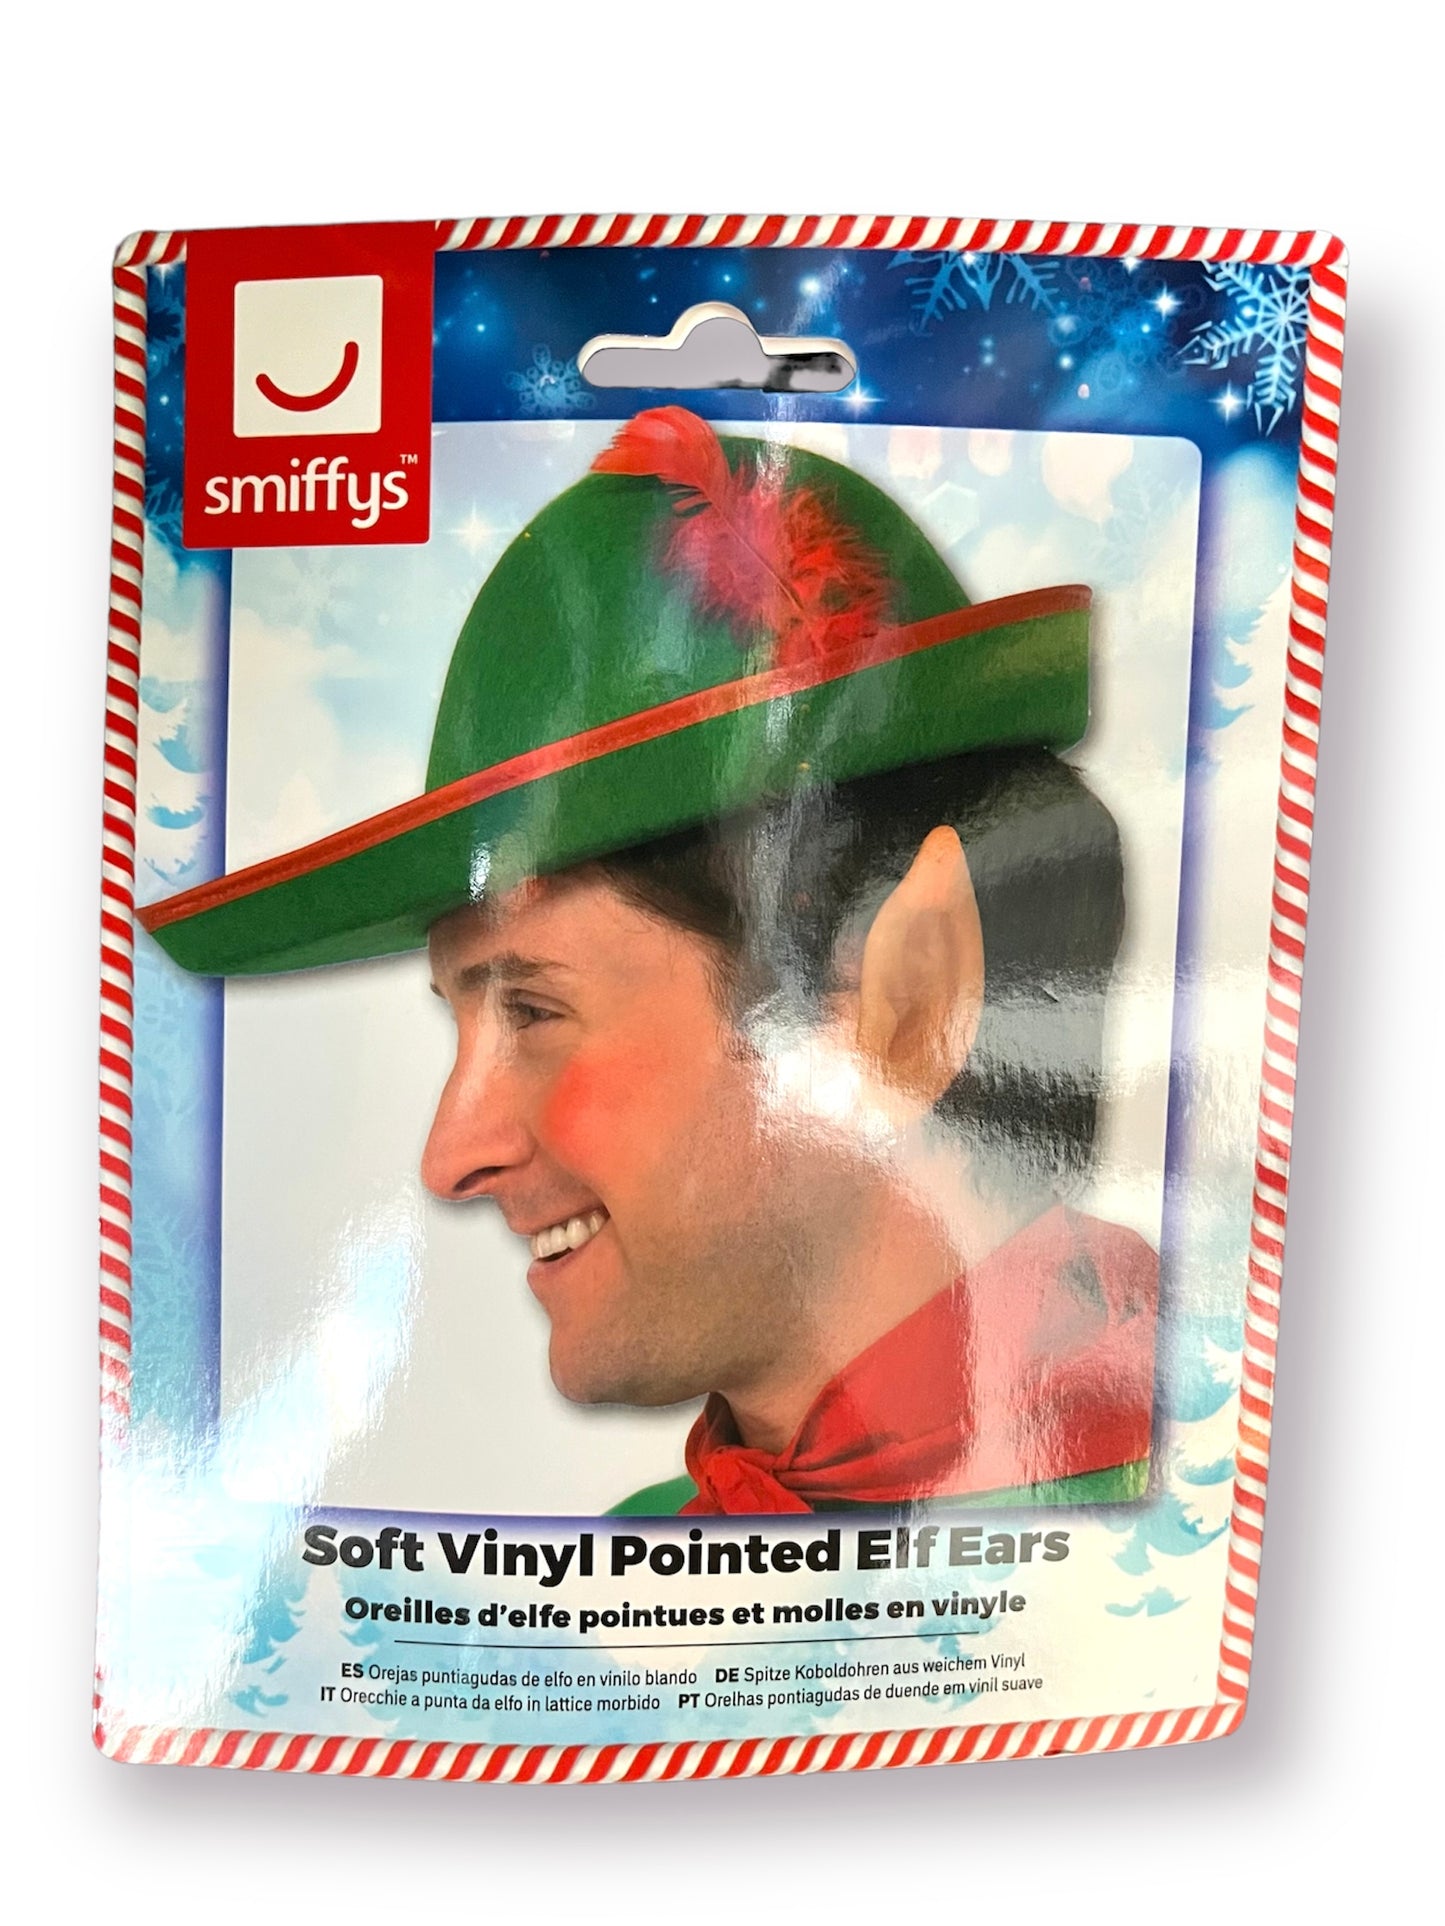 New Soft Vinyl pointed Elf ears